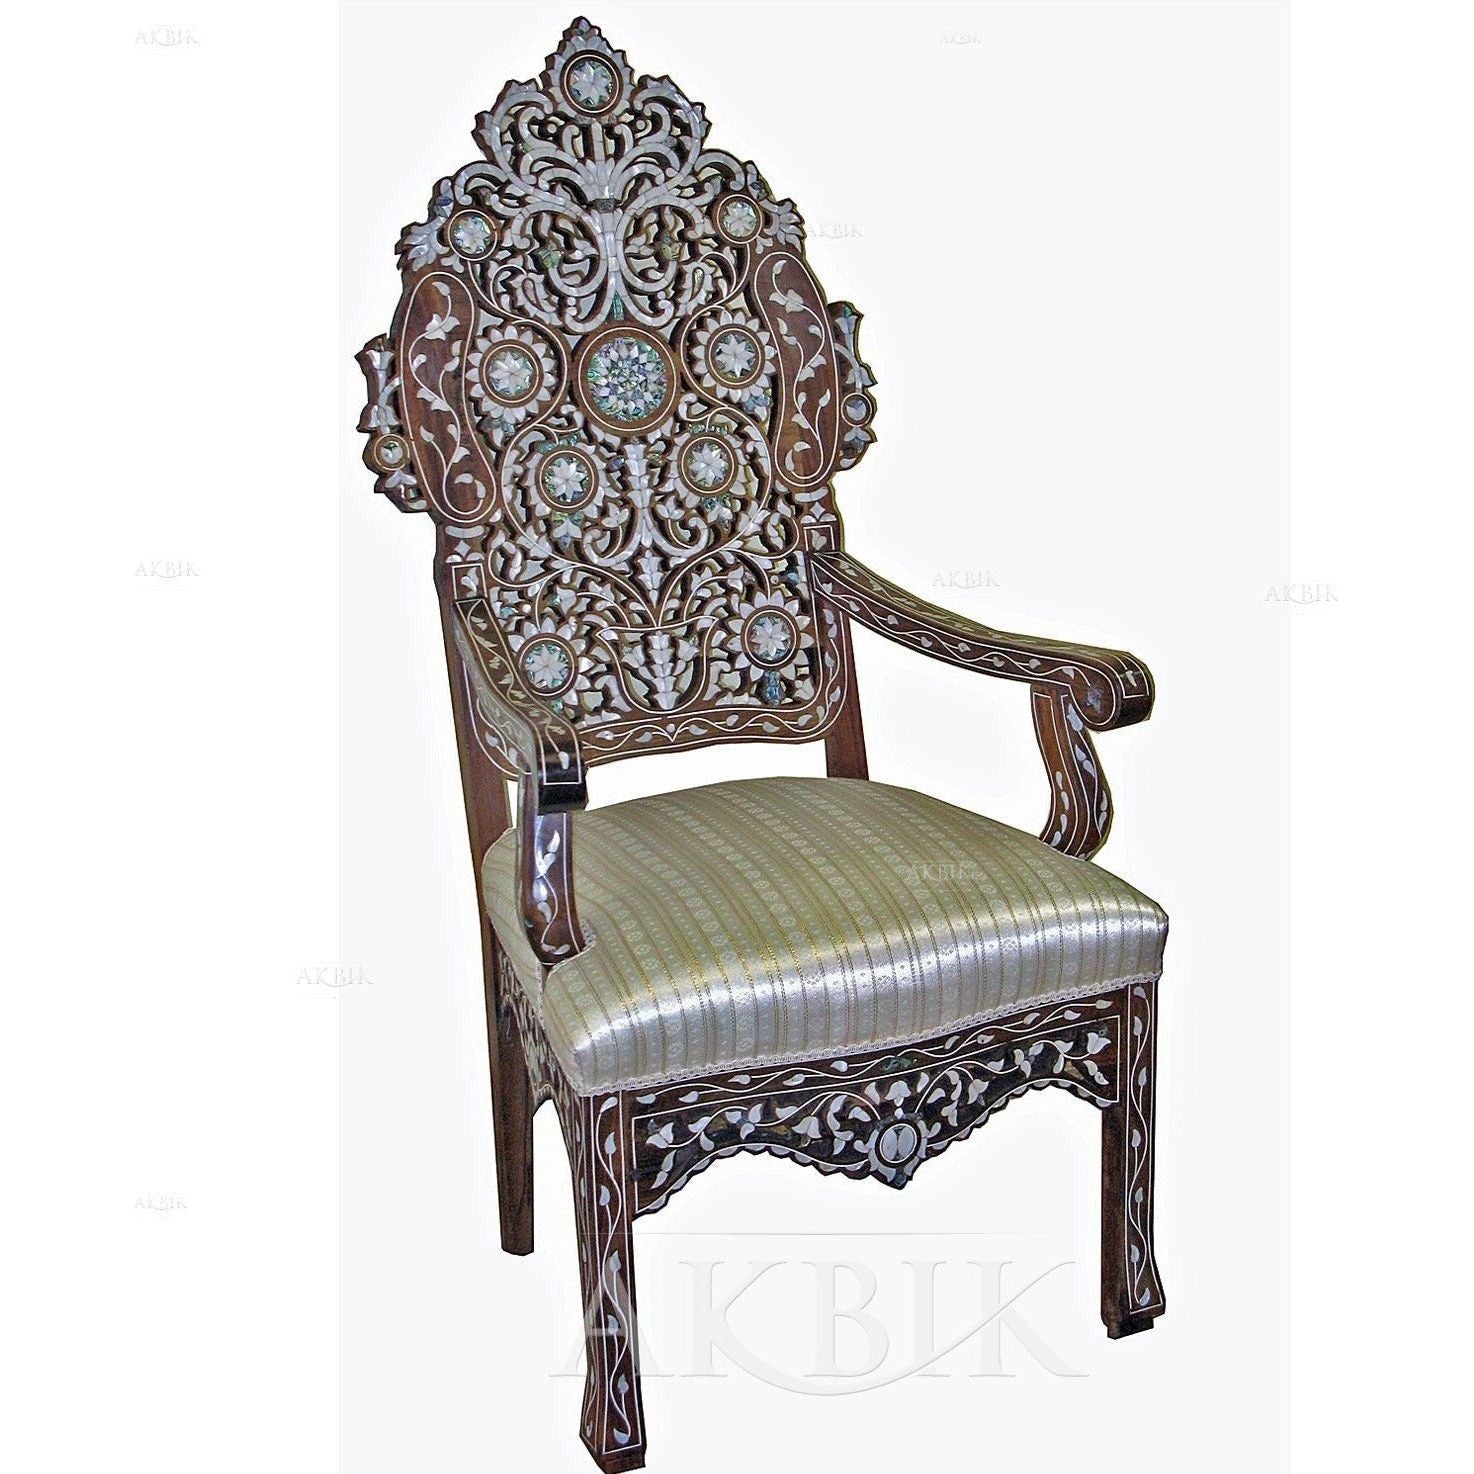 KINGS AND QUEENS CHAIR - AKBIK Furniture & Design